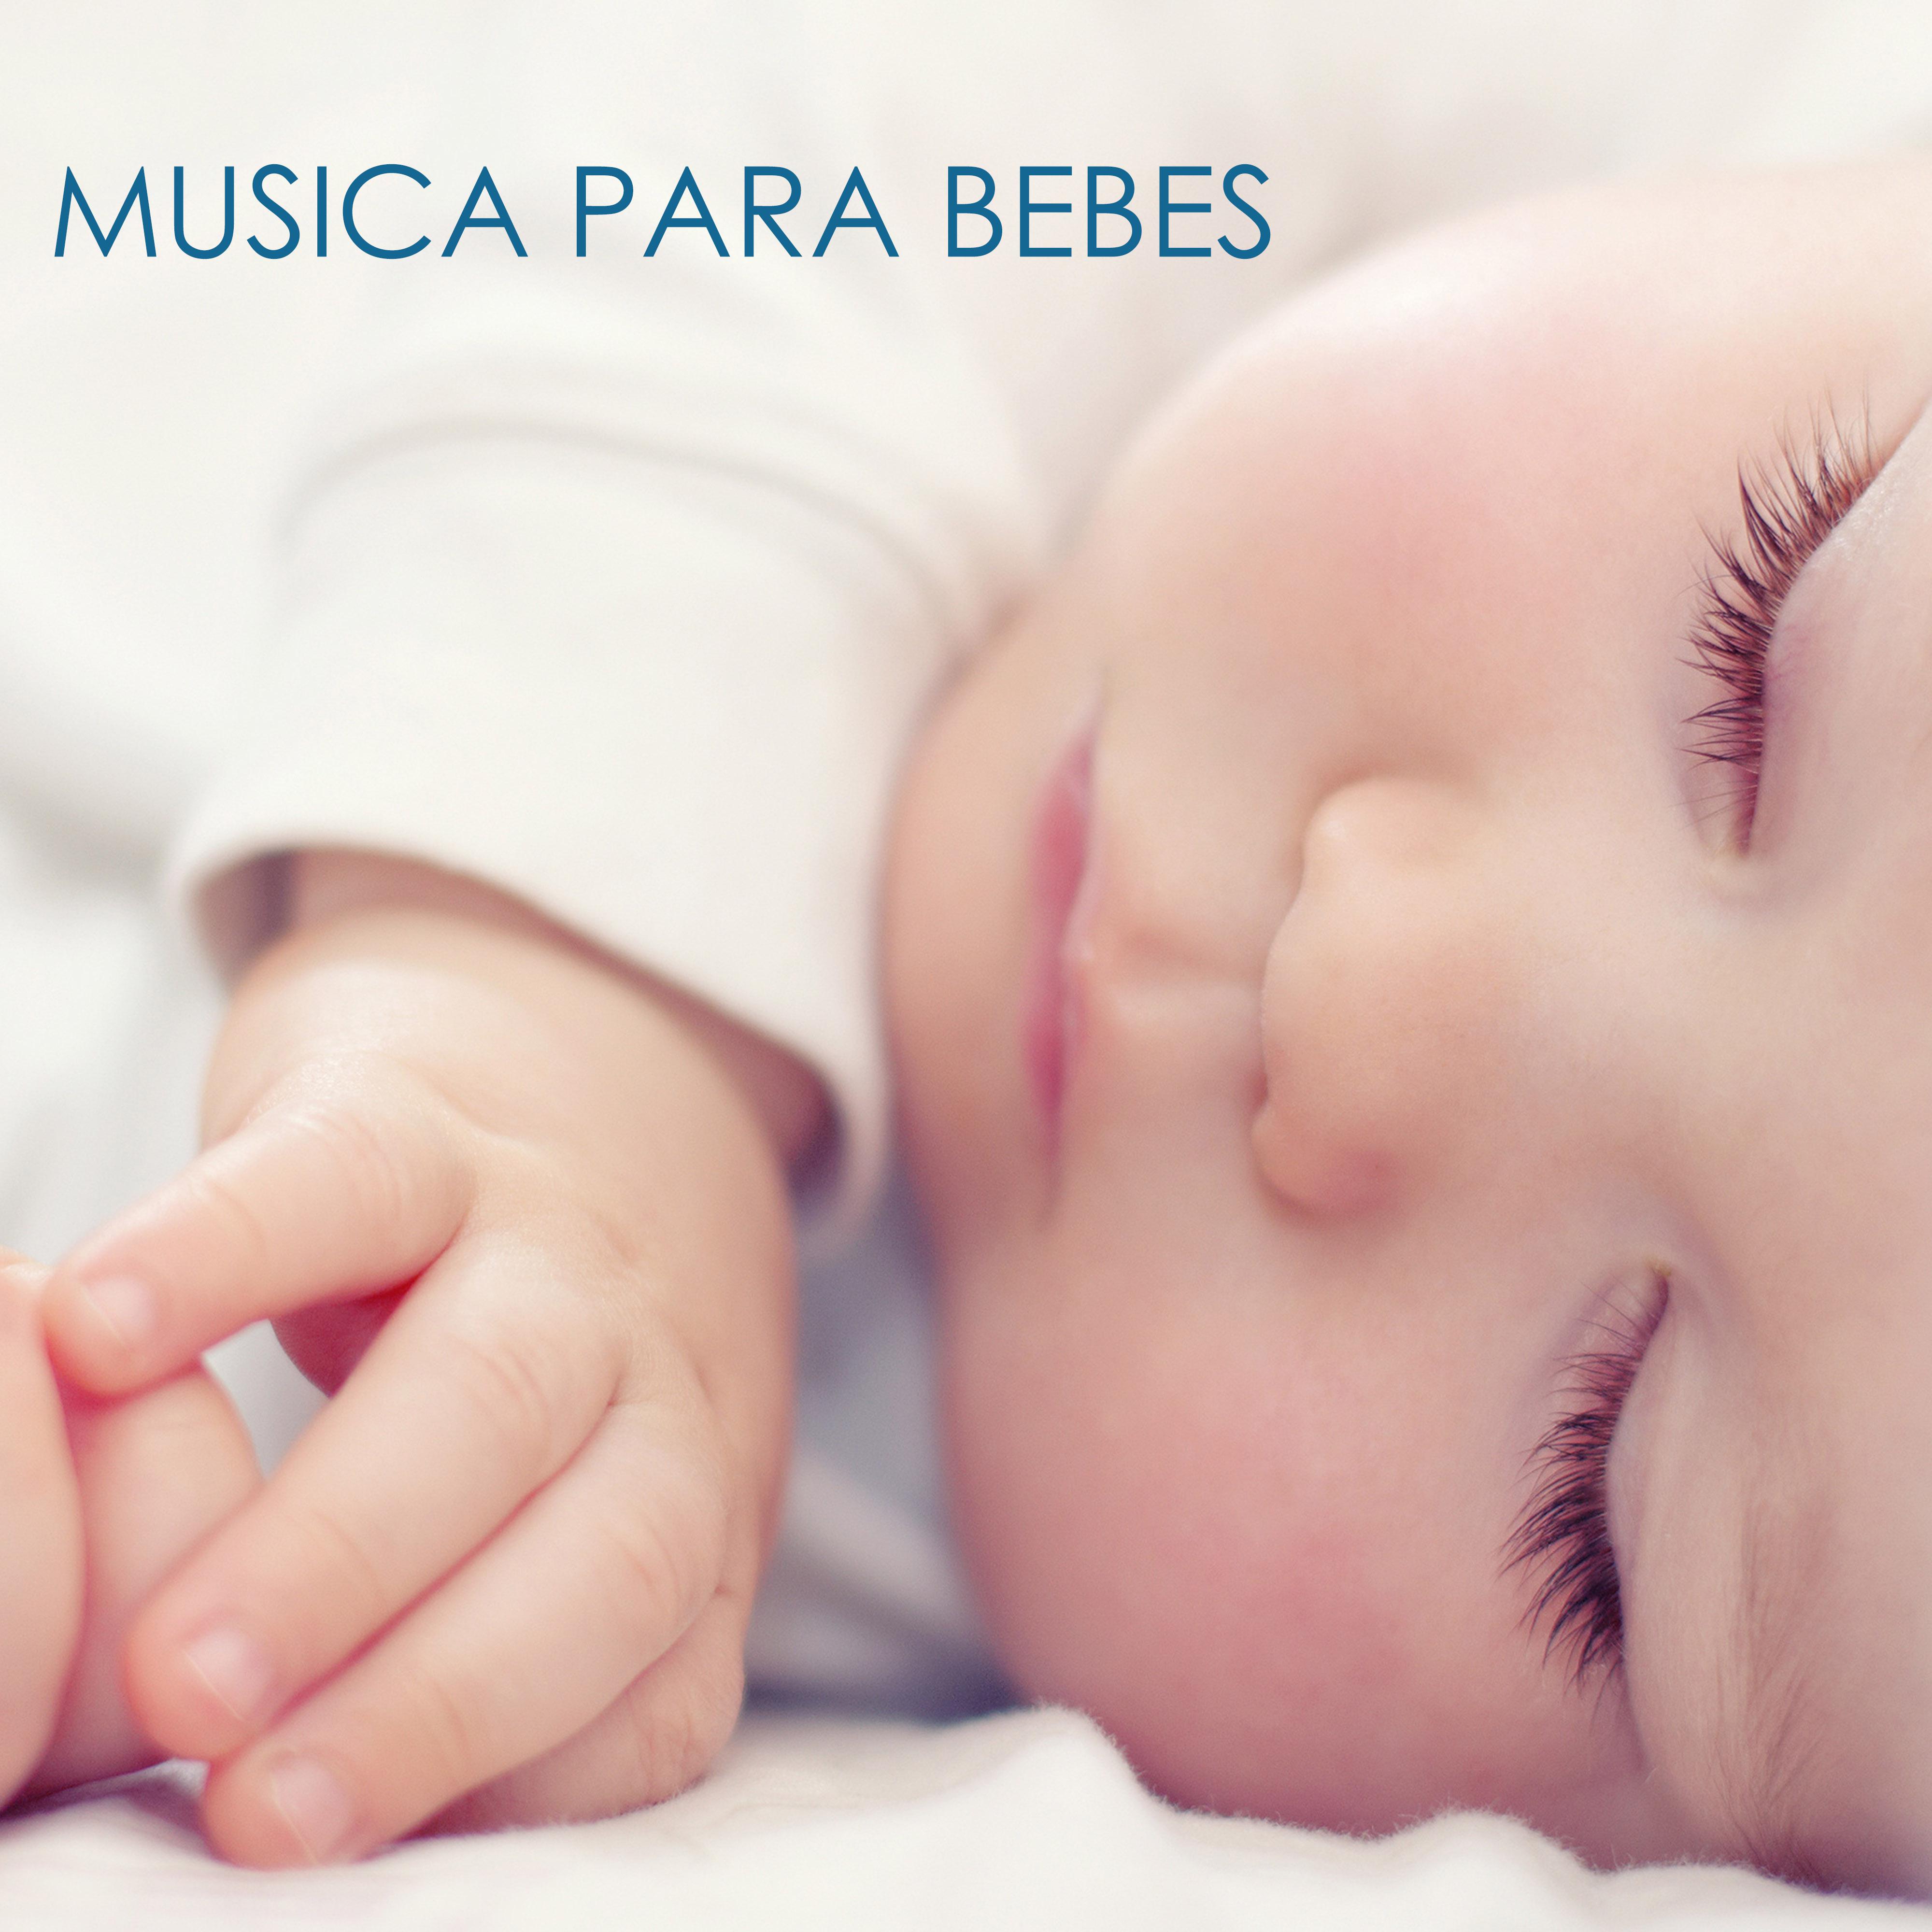 New Age Musica para Bebes